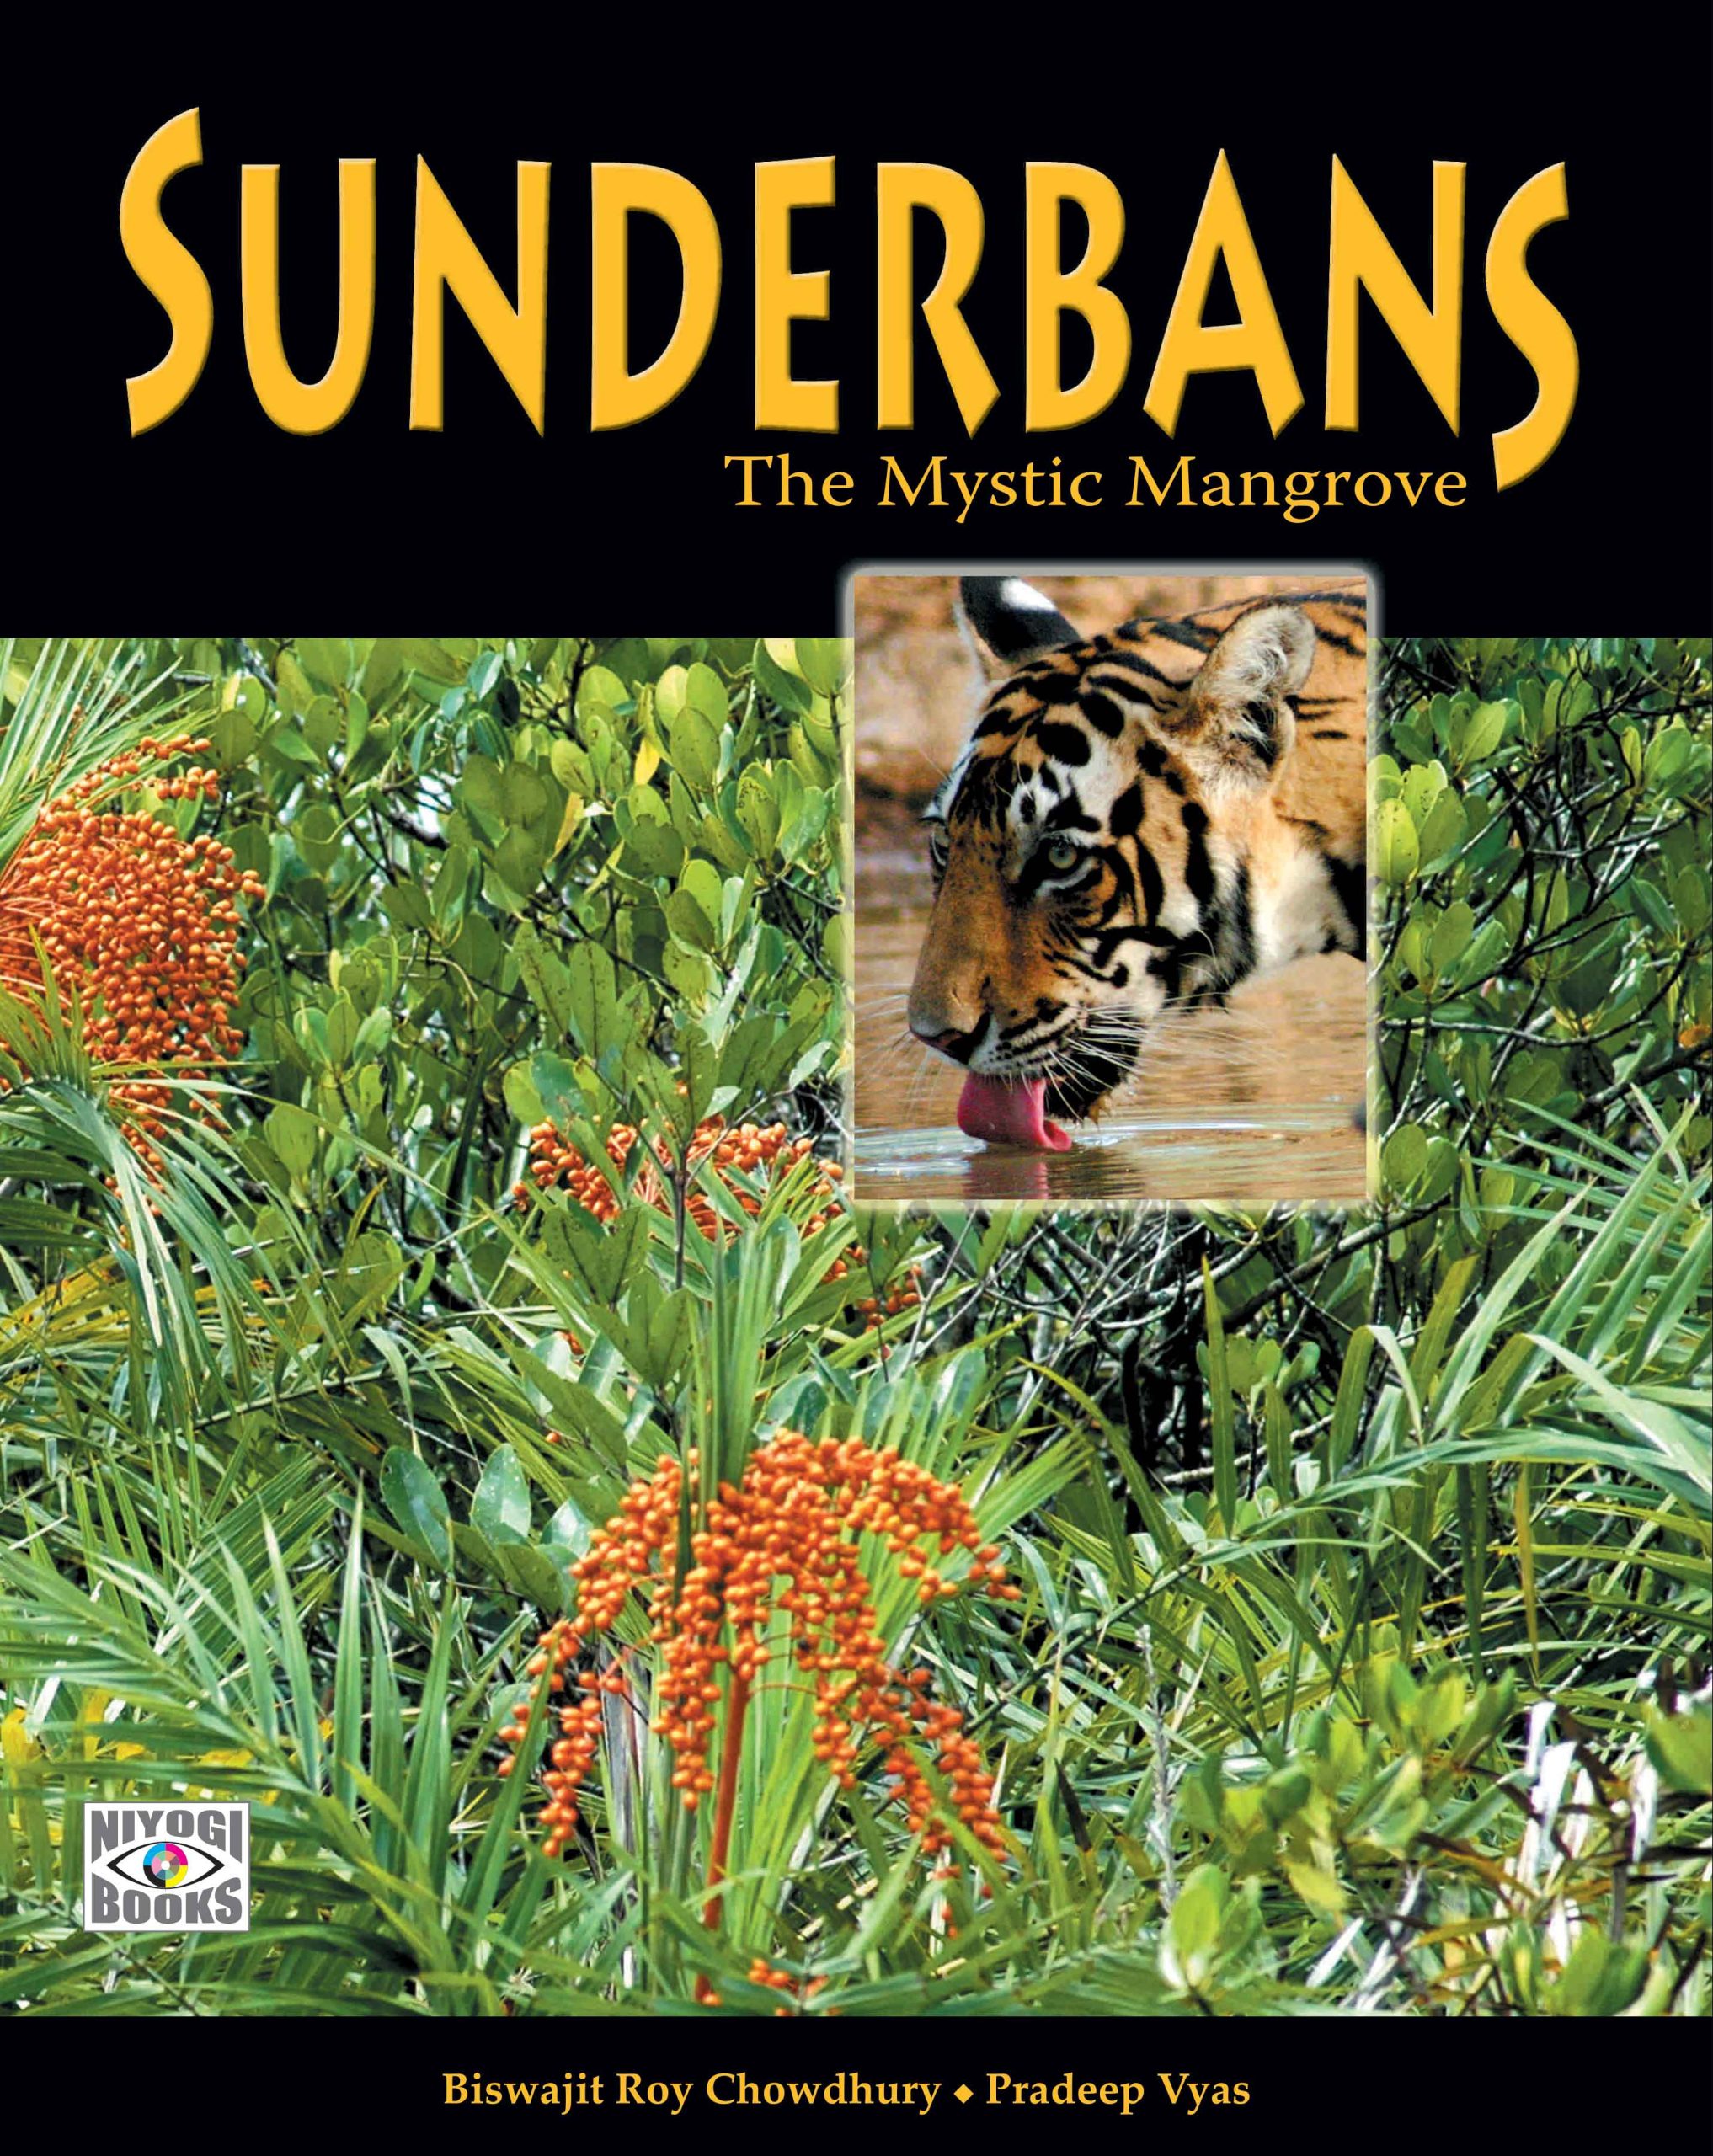 Sunderbans The Mystic Mangrove WEB scaled